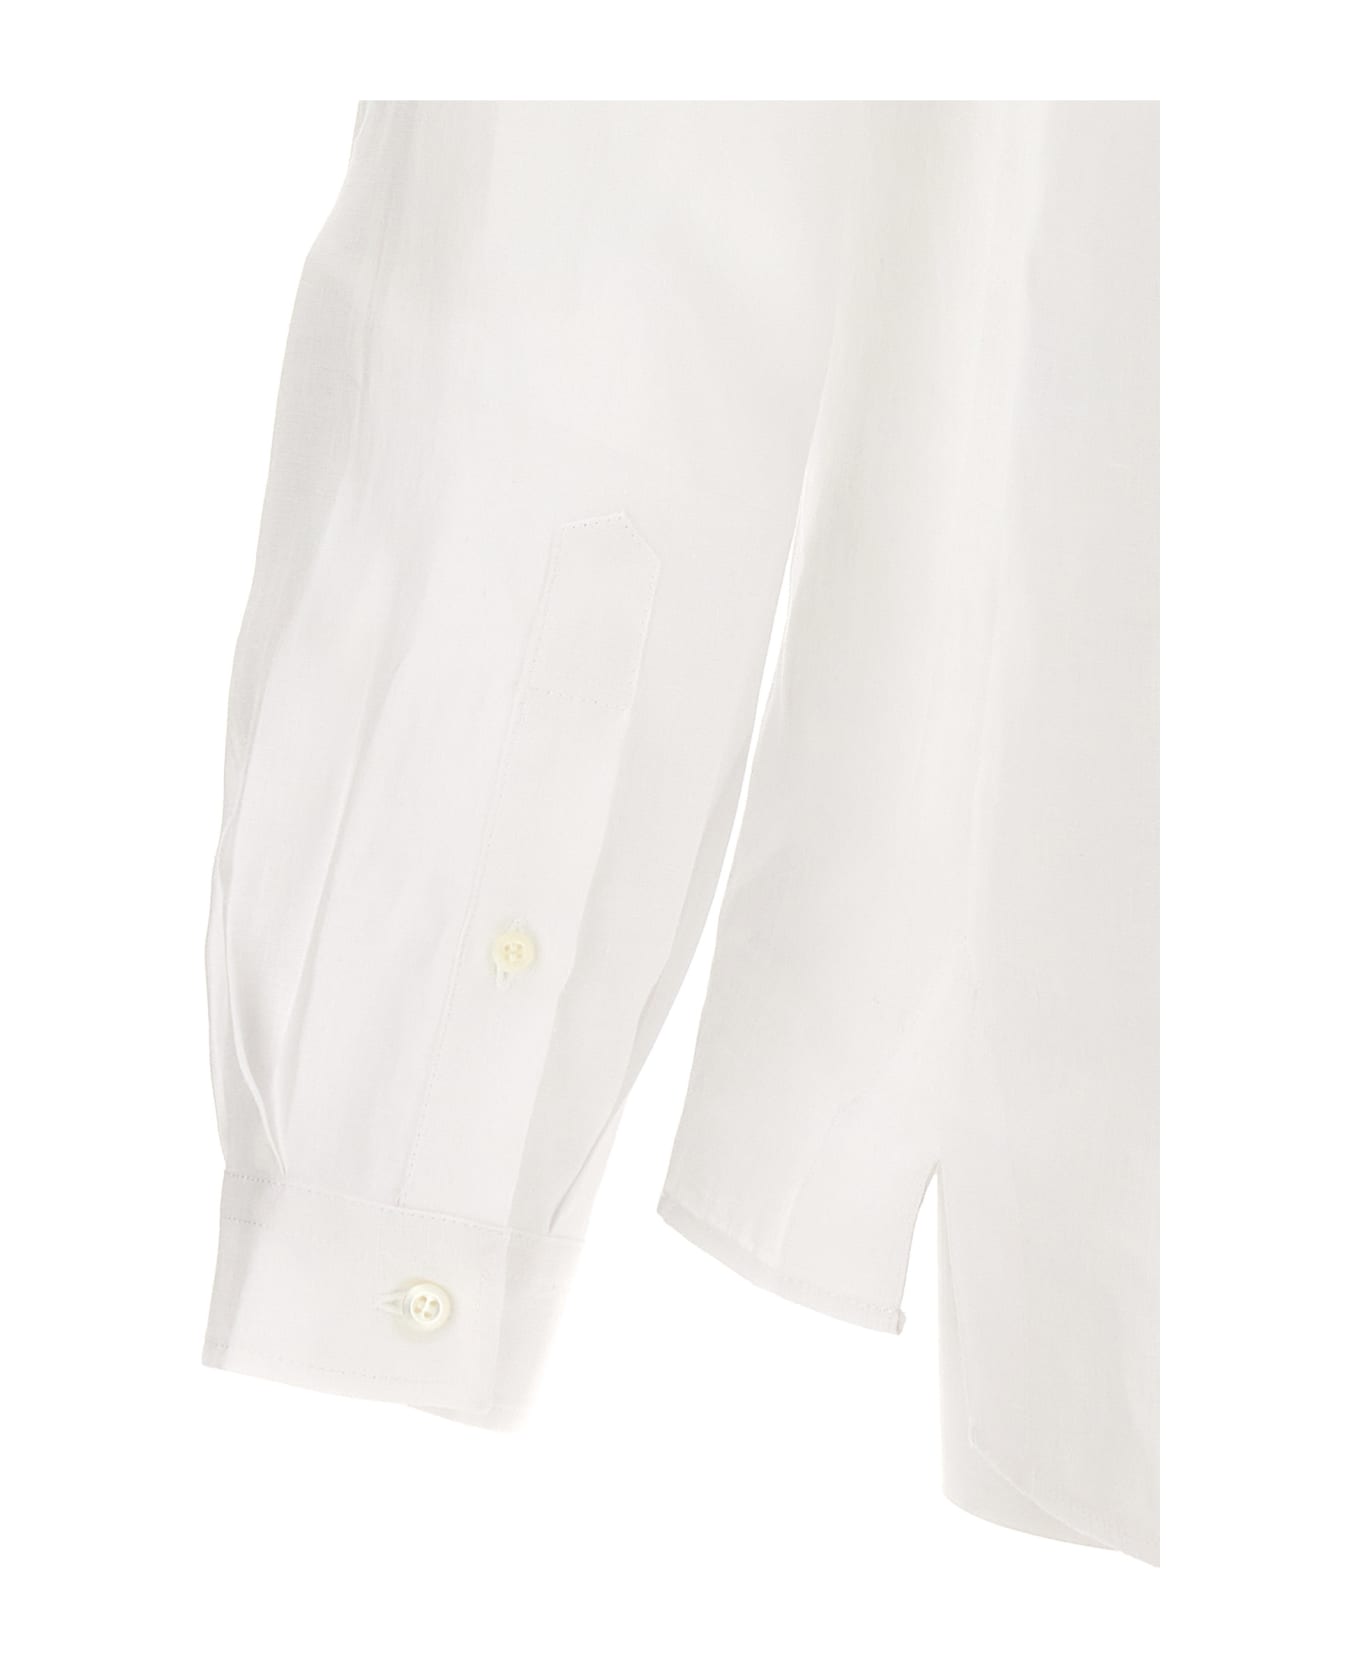 Brunello Cucinelli Korean Hemp Shirt - White